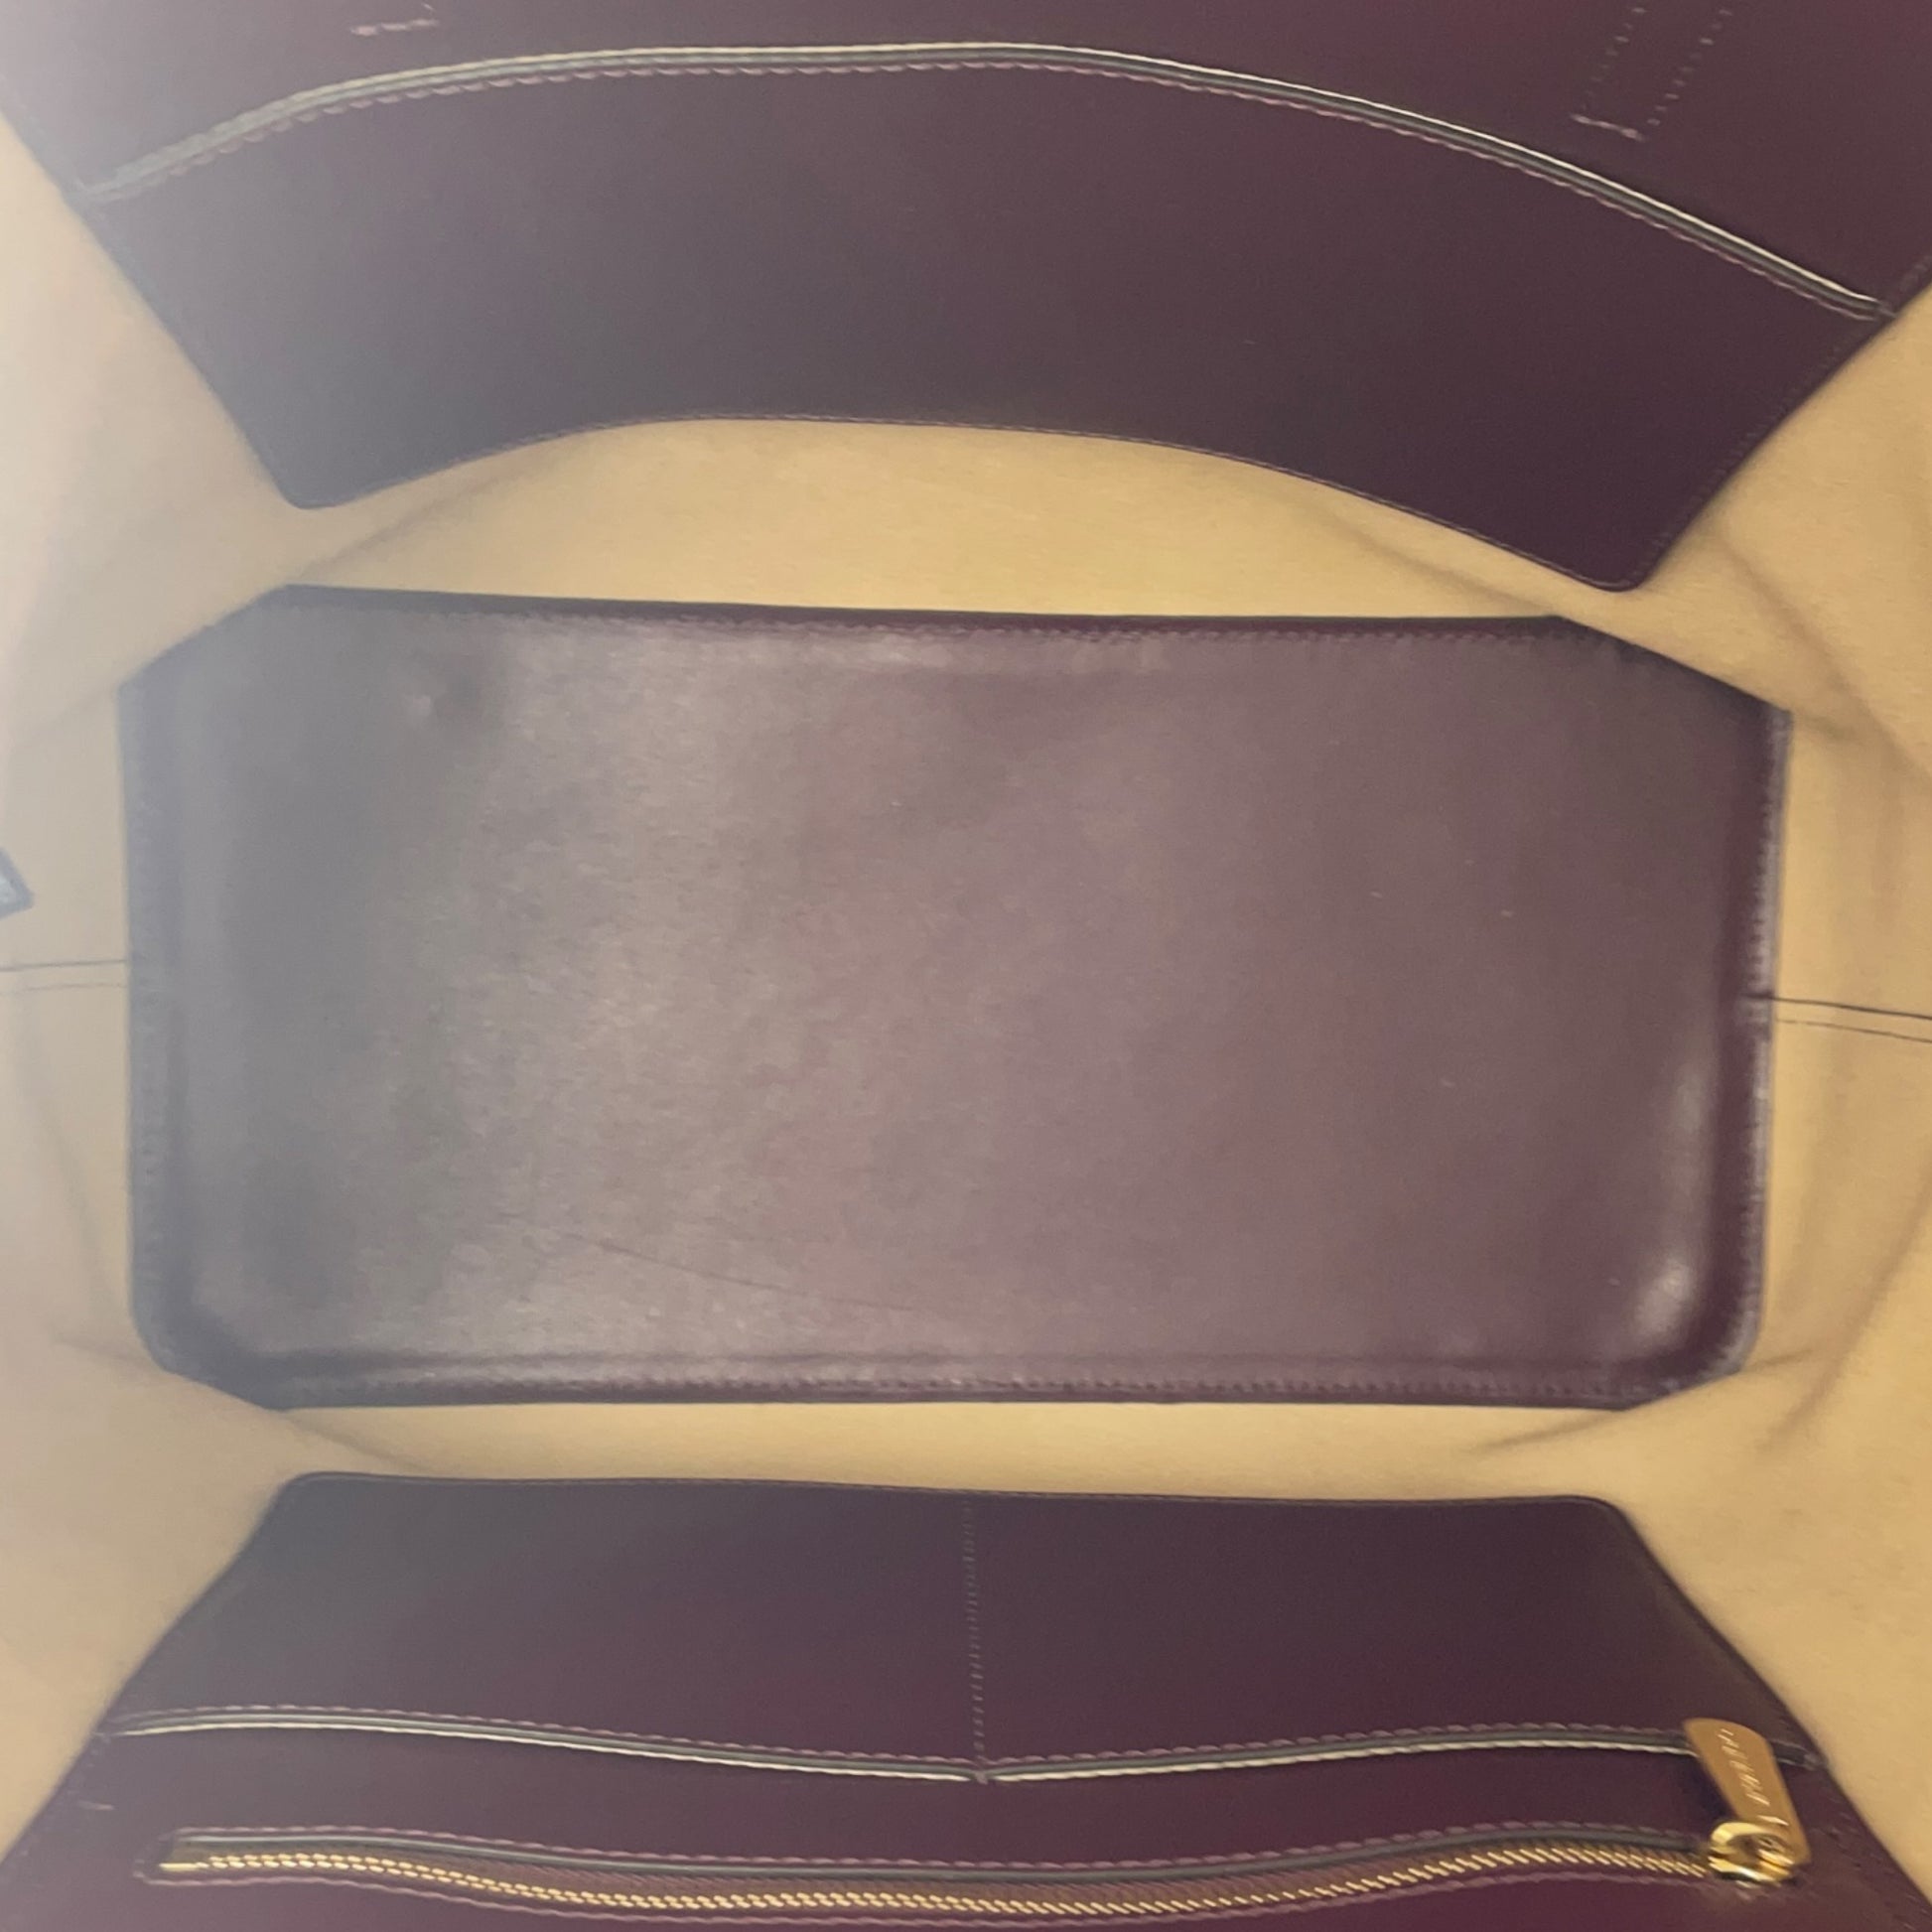 Authentic Michael Kors Mens Bags on sale Archives - Luxe Purses